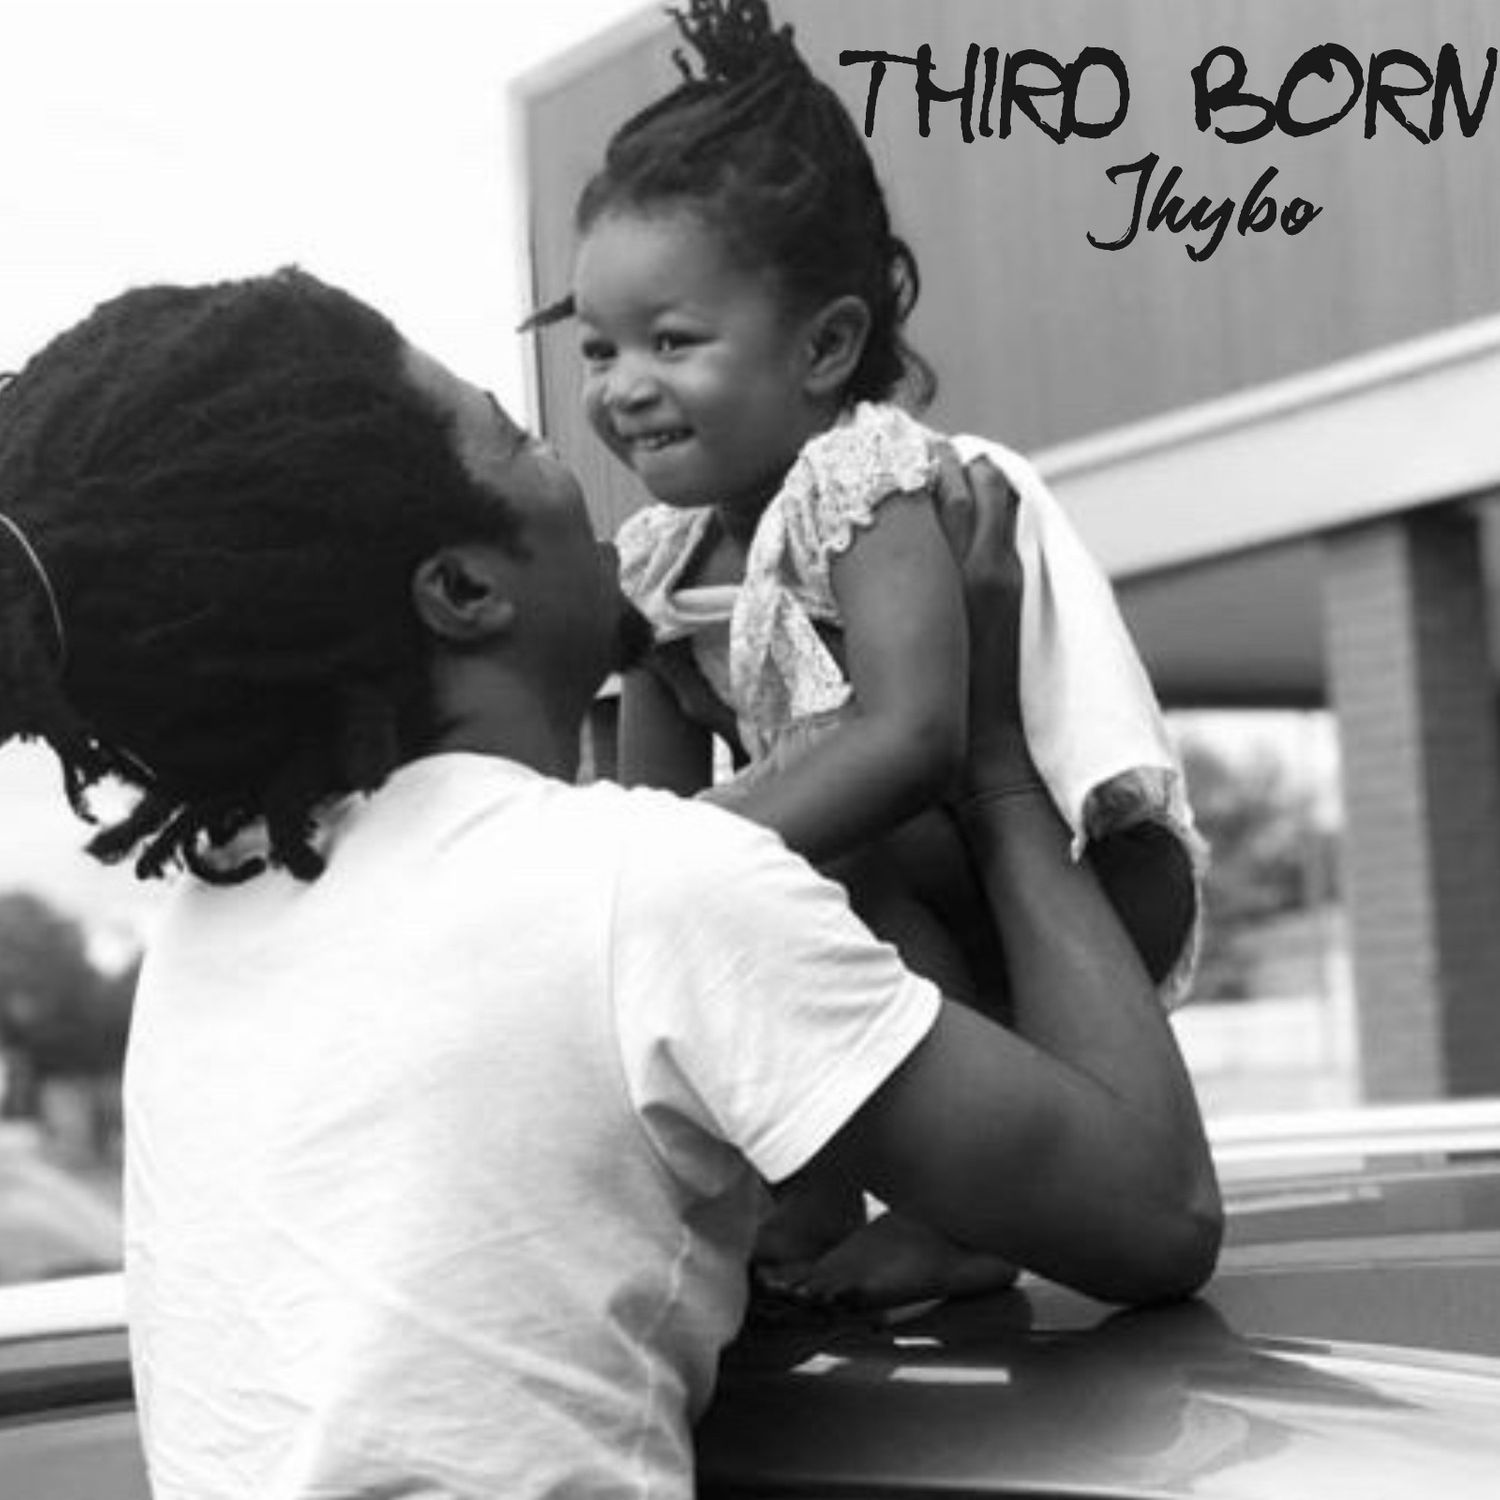 Jhybo - Third Born (EP)